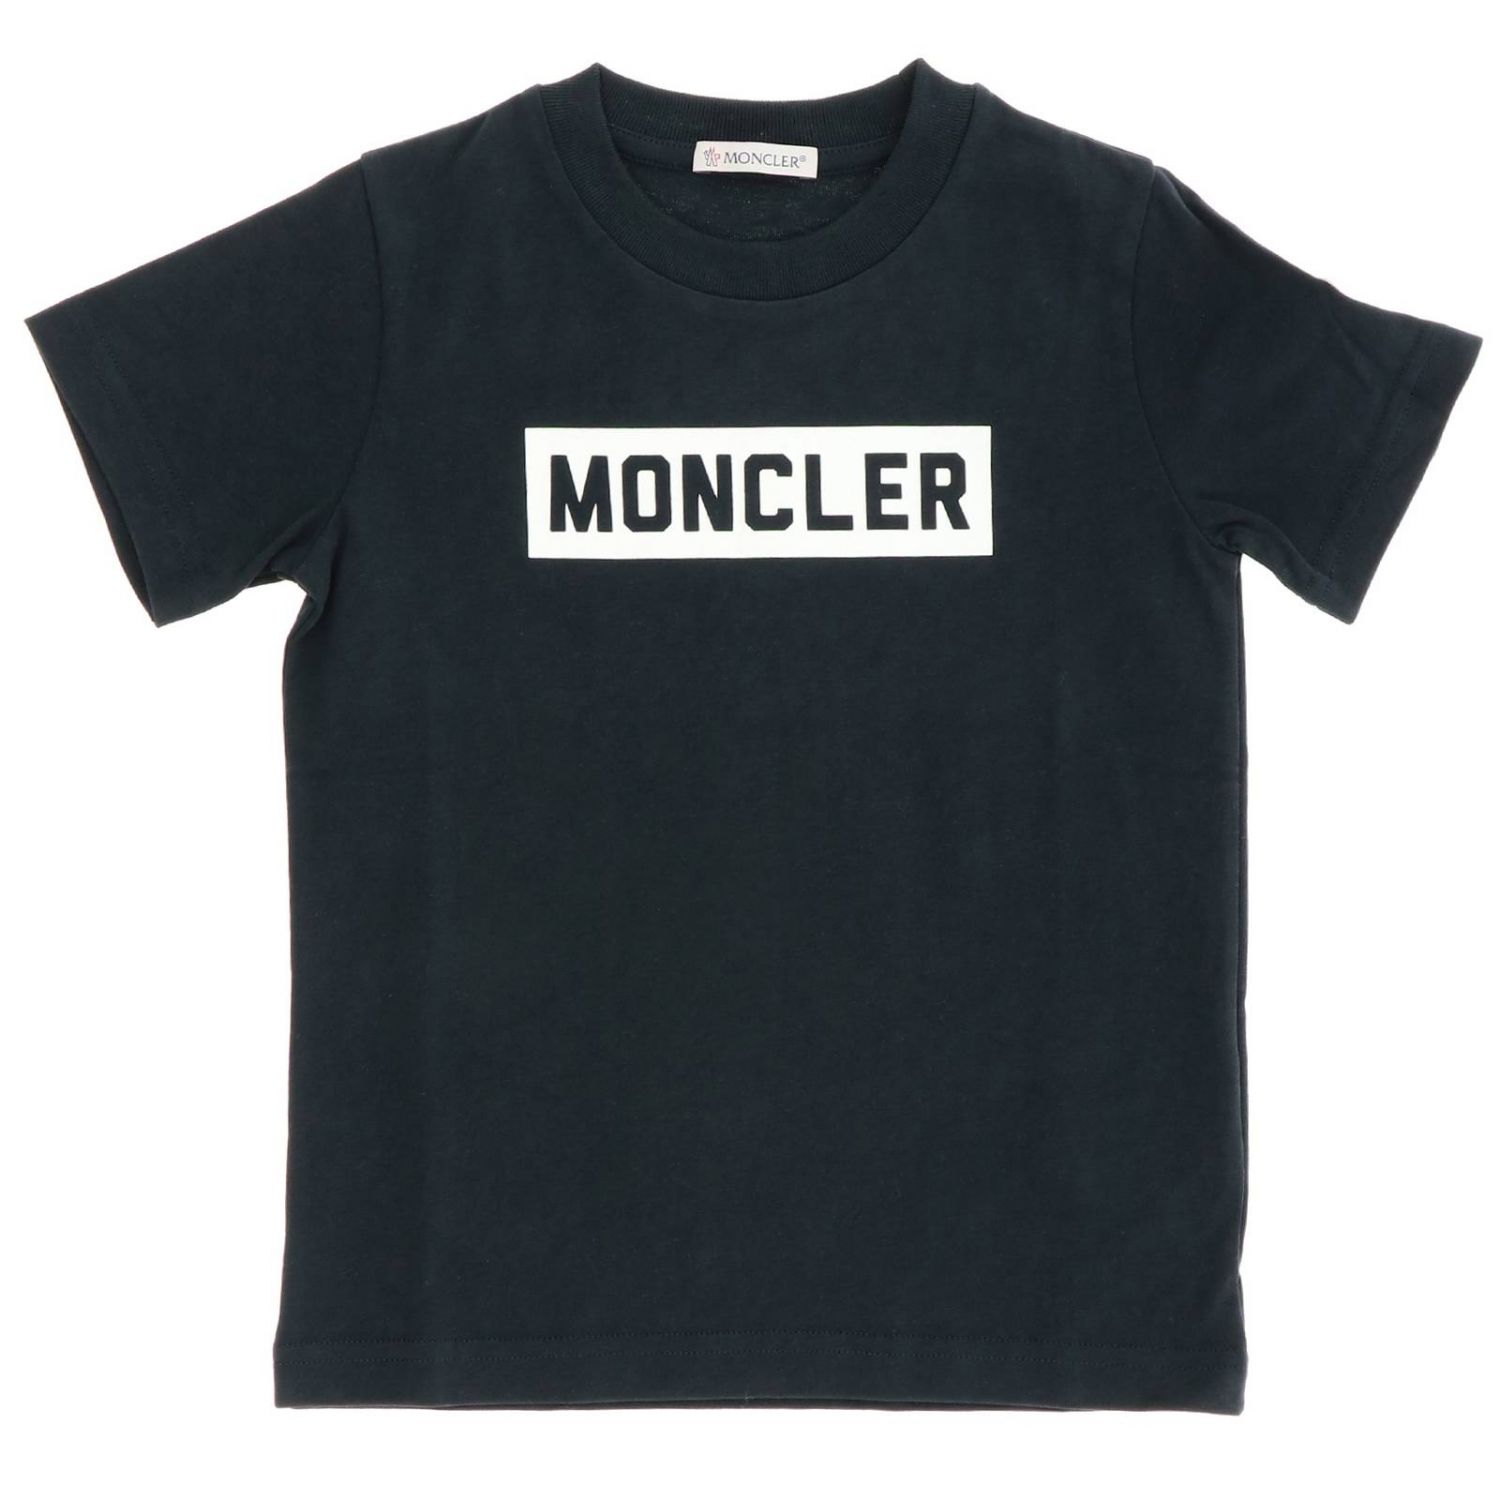 T-shirt kids Moncler | T-Shirt Moncler Kids Black | T-Shirt Moncler